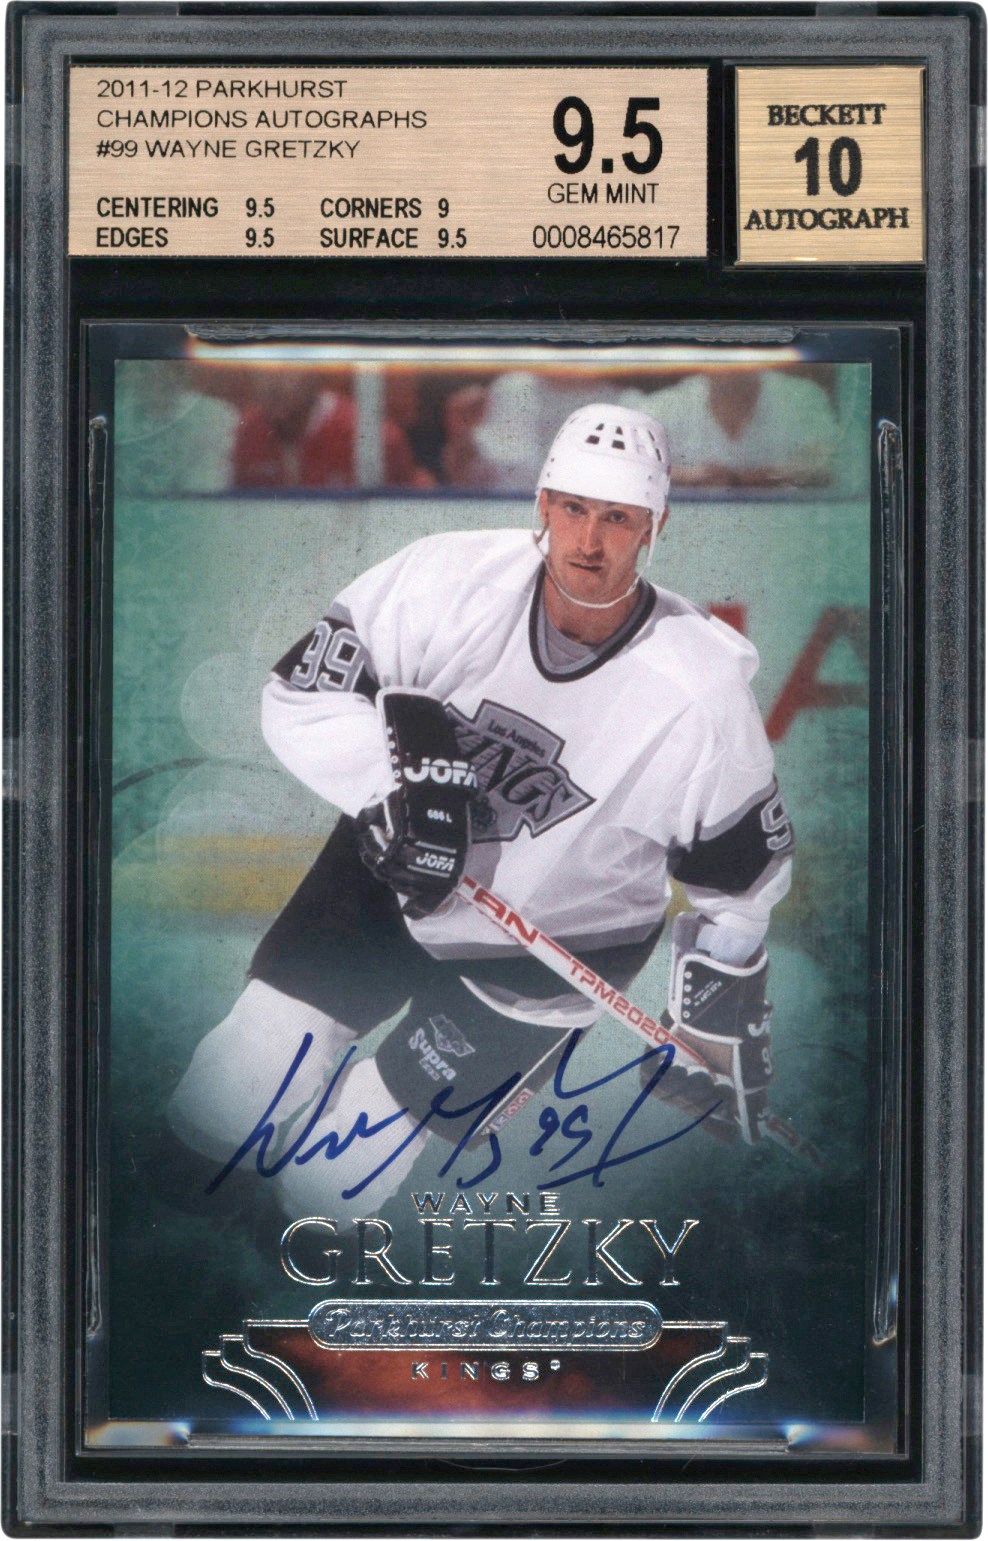 Hockey Cards - 2011-2012 Parkhurst Hockey Champions Autograph #99 Wayne Gretzky Card BGS GEM MINT 9.5 Auto 10 (Pop 1 of 1 Highest Graded)